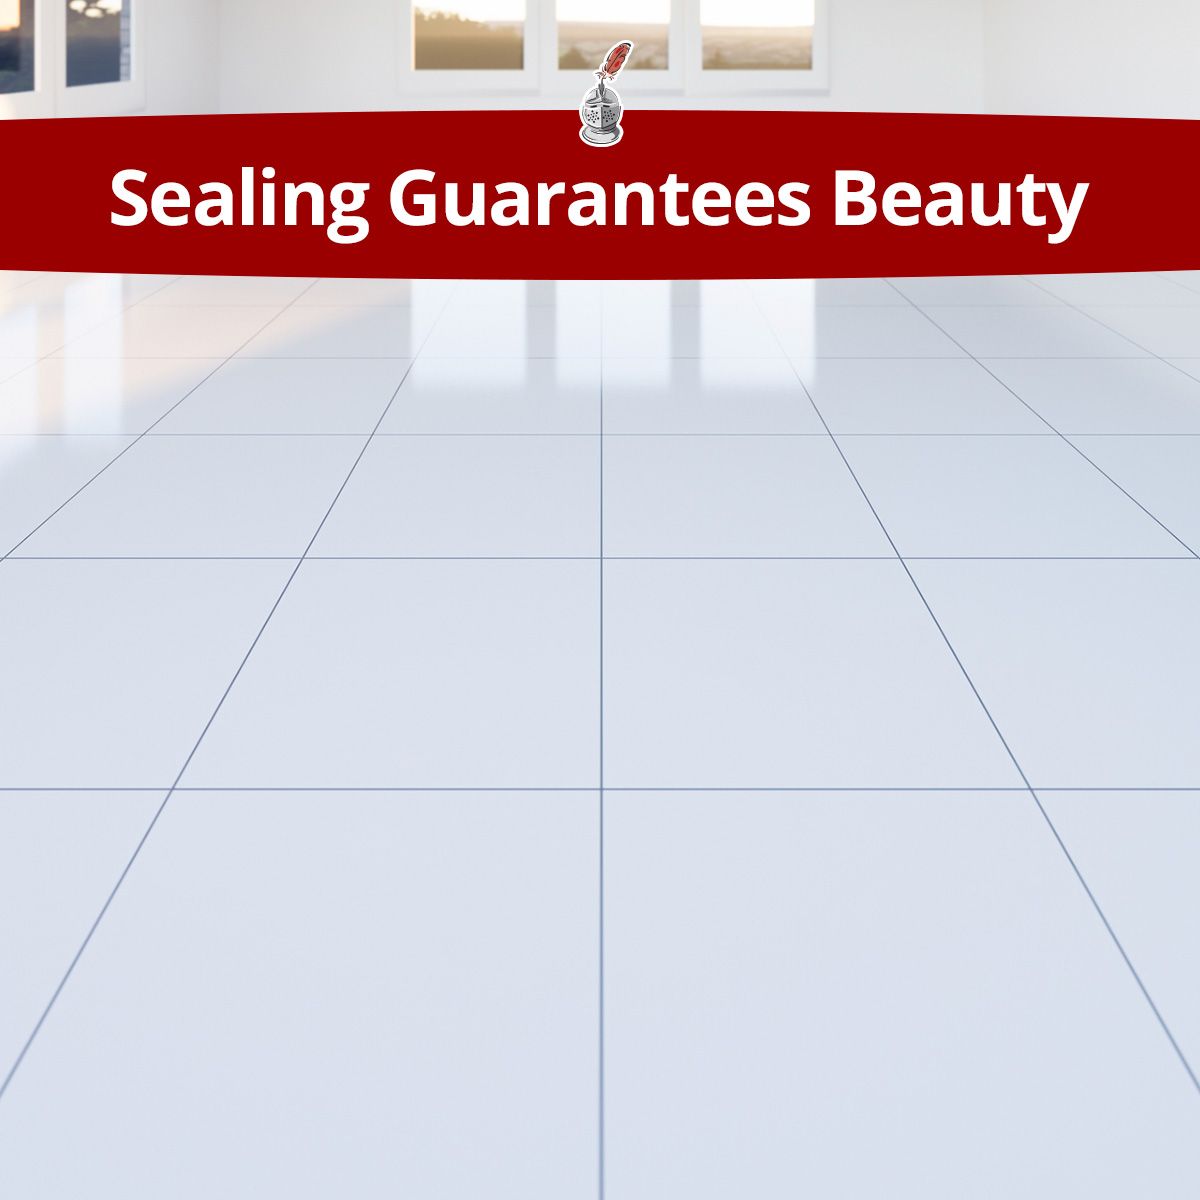 Sealing Guarantees Beauty